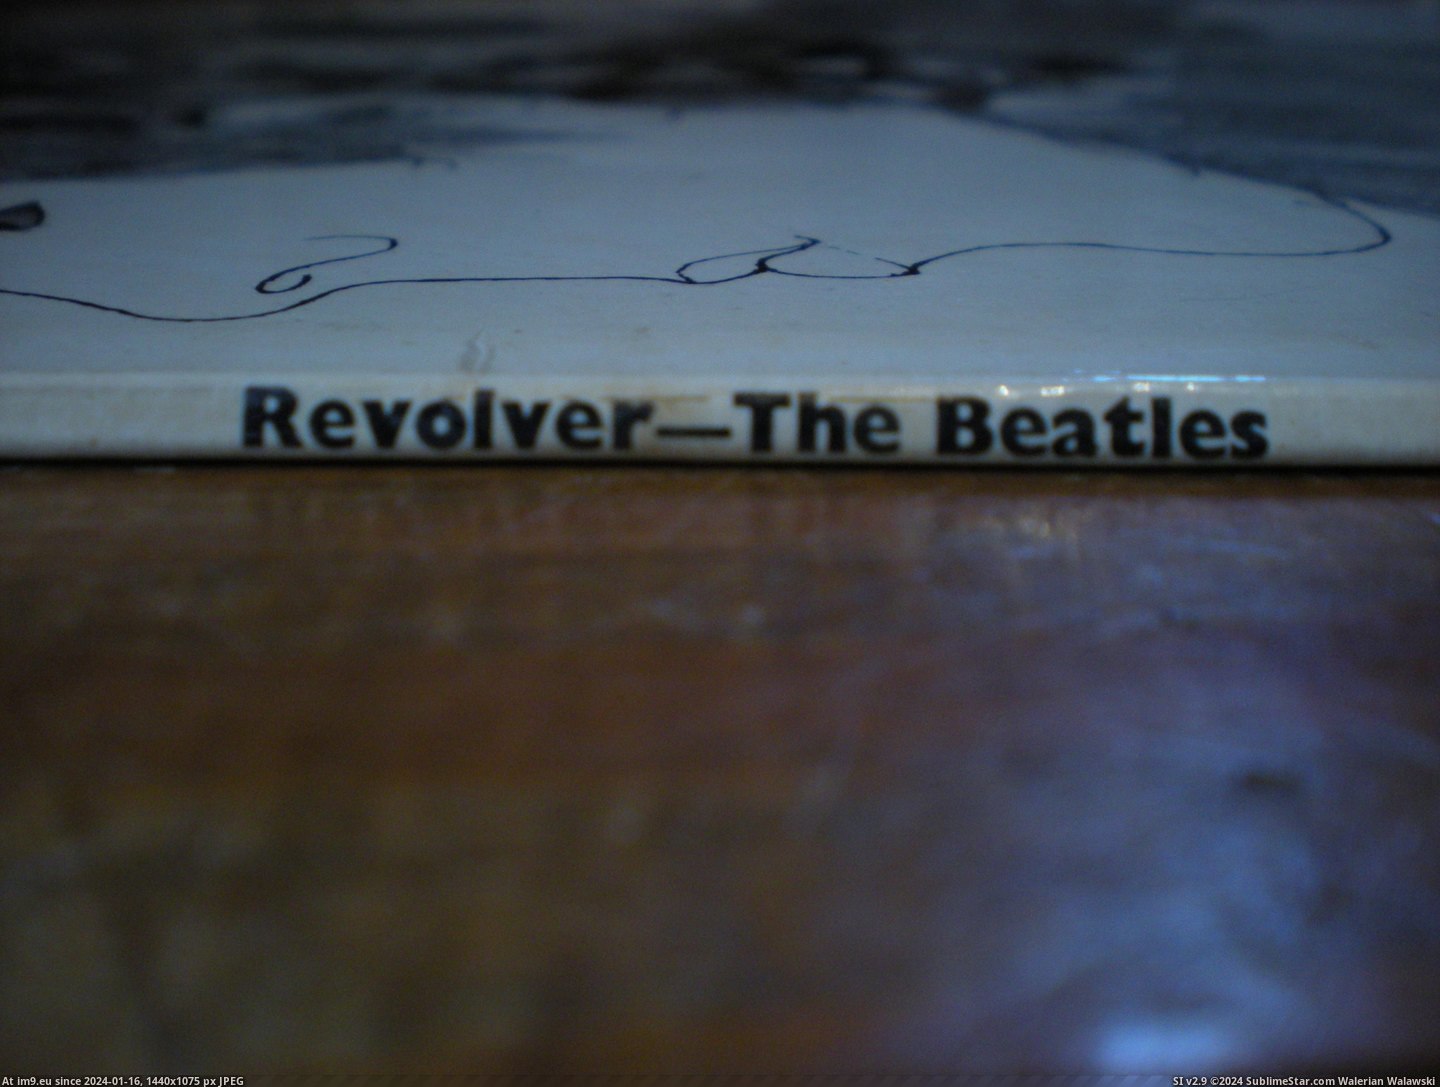  #Revolver  Revolver-2-2 8 Pic. (Изображение из альбом new 1))